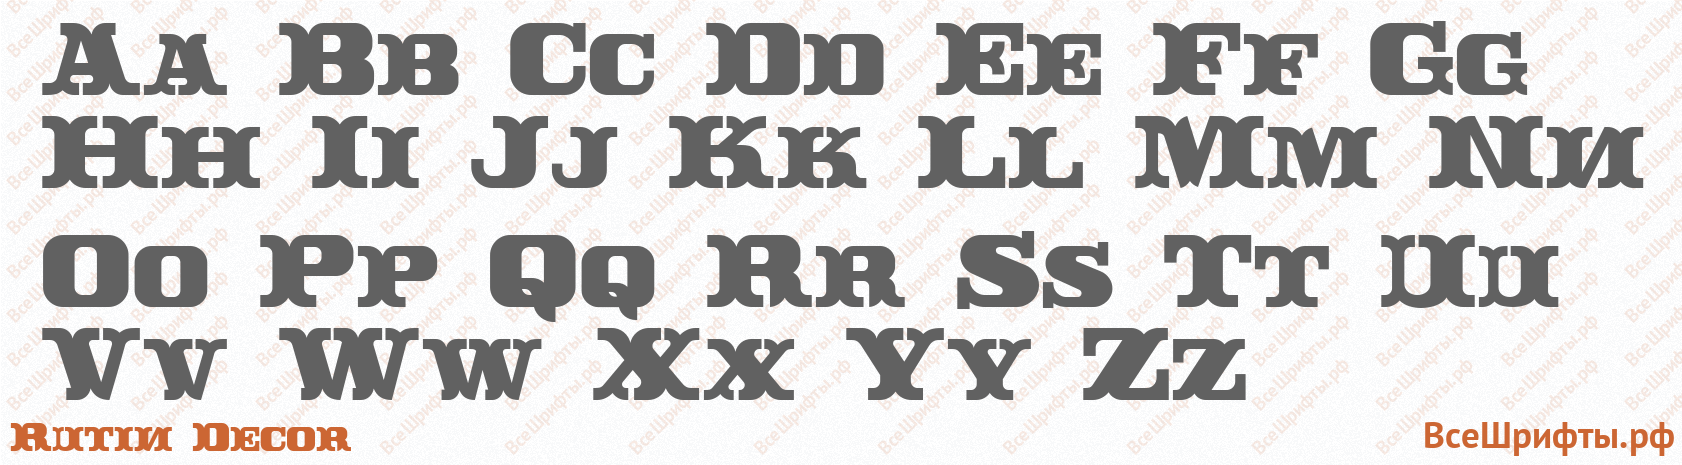 Шрифт Rutin Decor с латинскими буквами